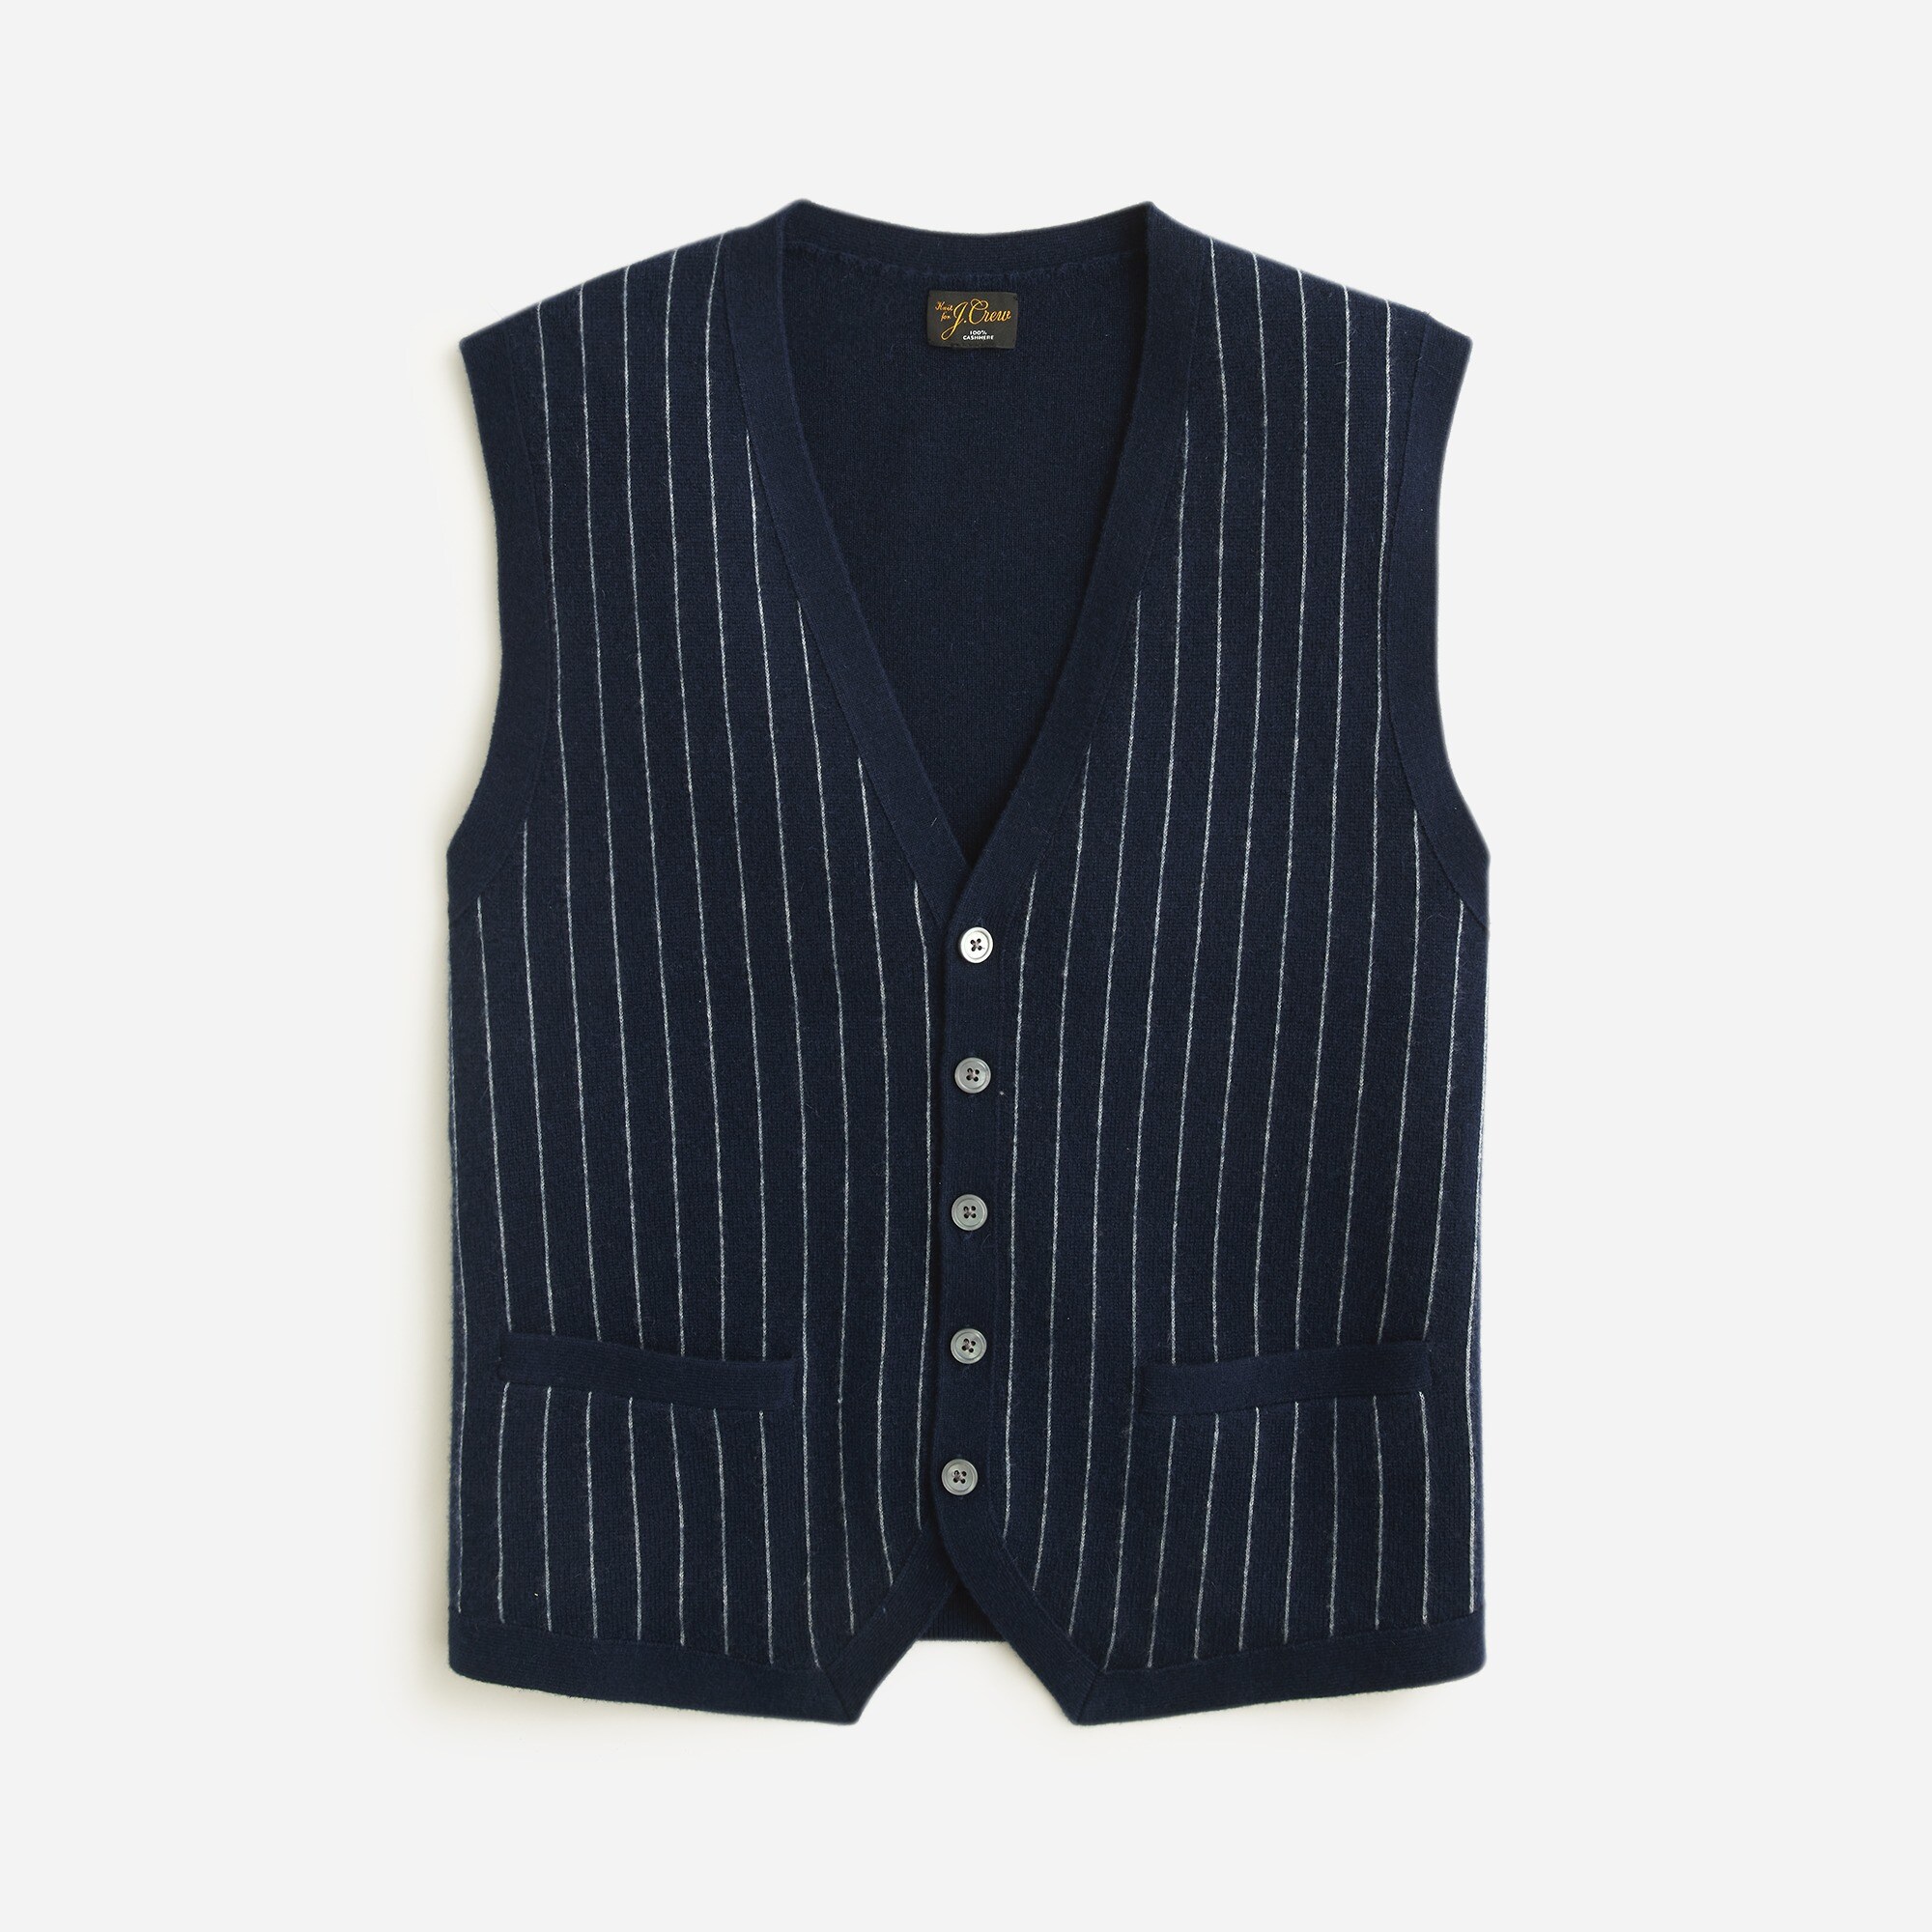  Cashmere-blend cardigan sweater-vest in pinstripe